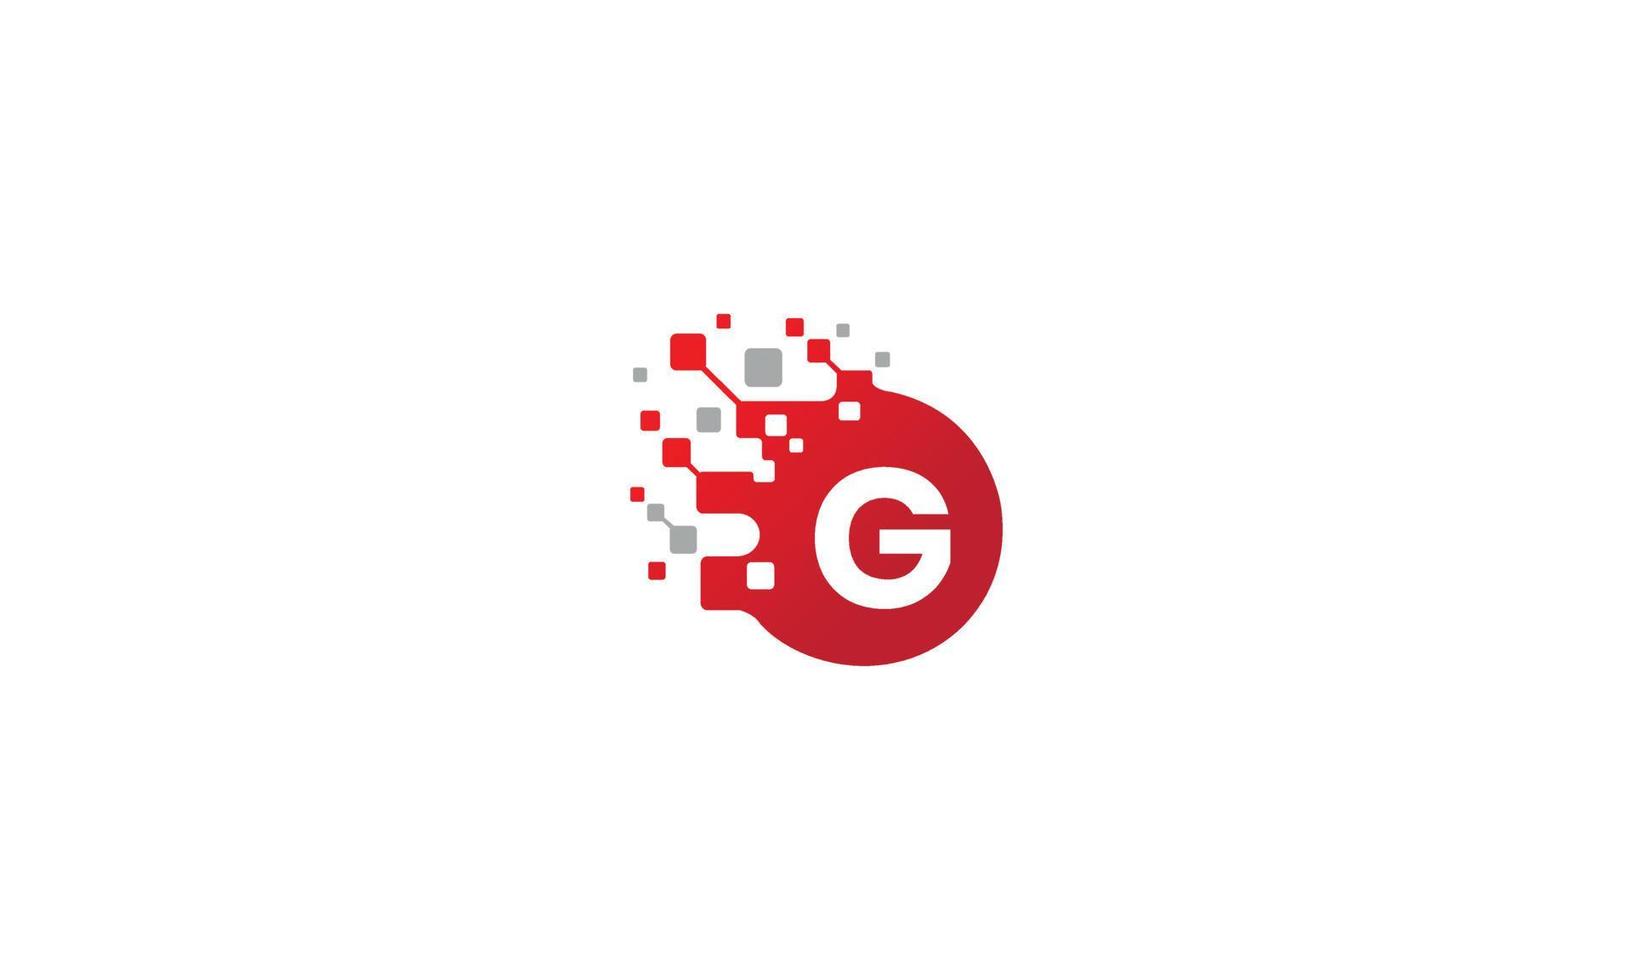 G logo. G letter. Initial letter G linked circle and dot logo. G design. Red and gray G letter. G letter logo design. Pro Vector